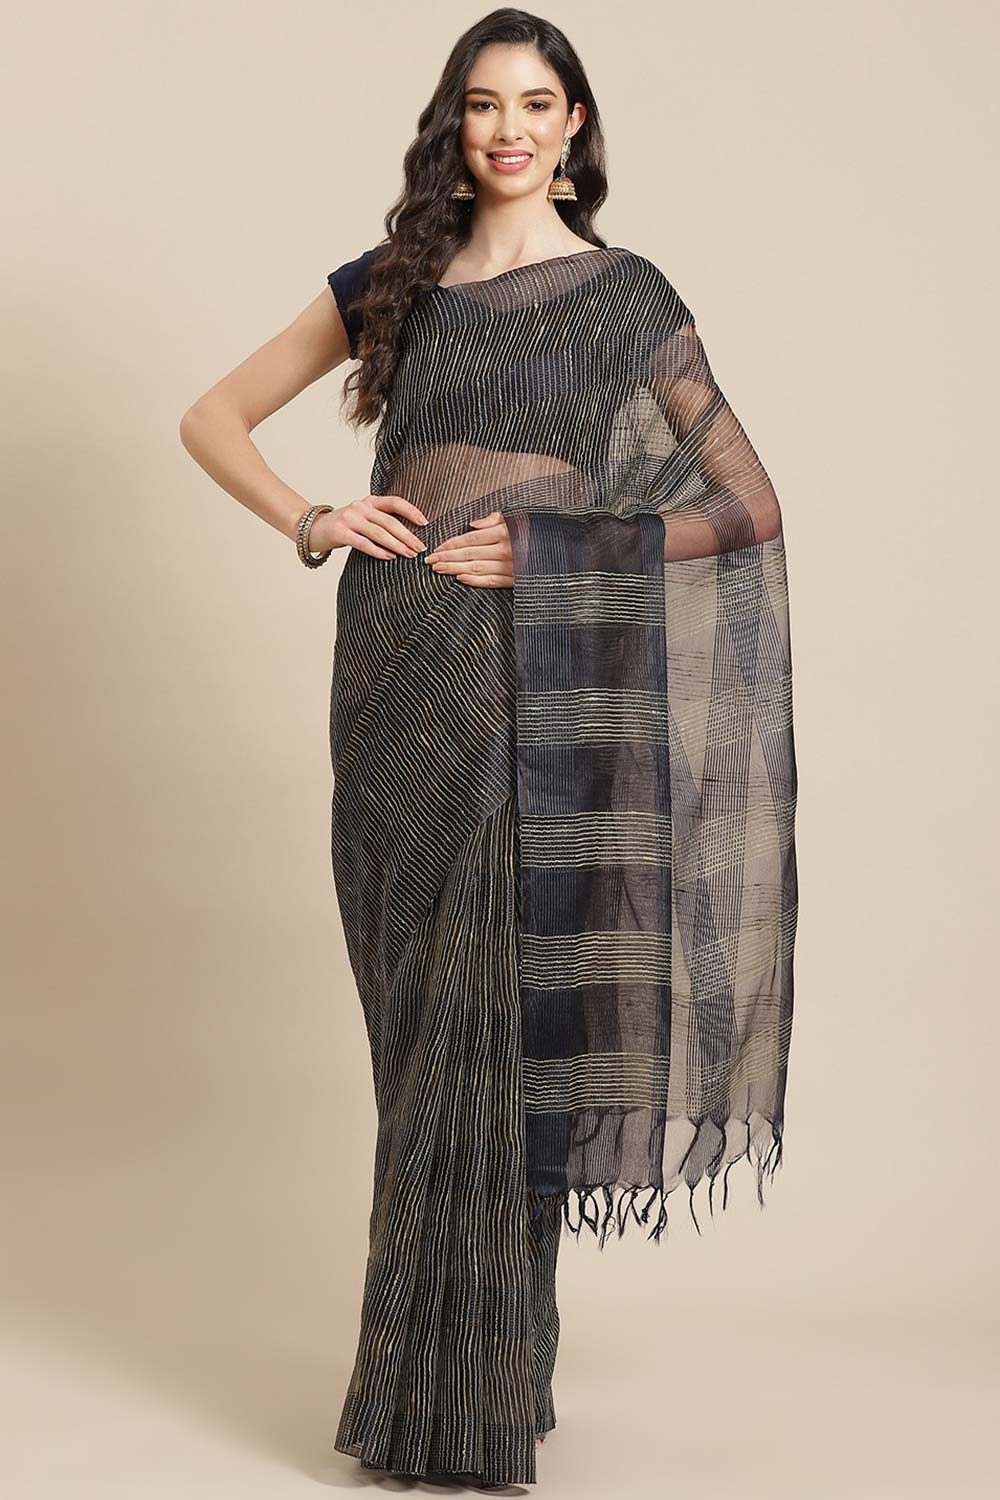 Buy Art Silk Woven Saree in Navy Blue Online